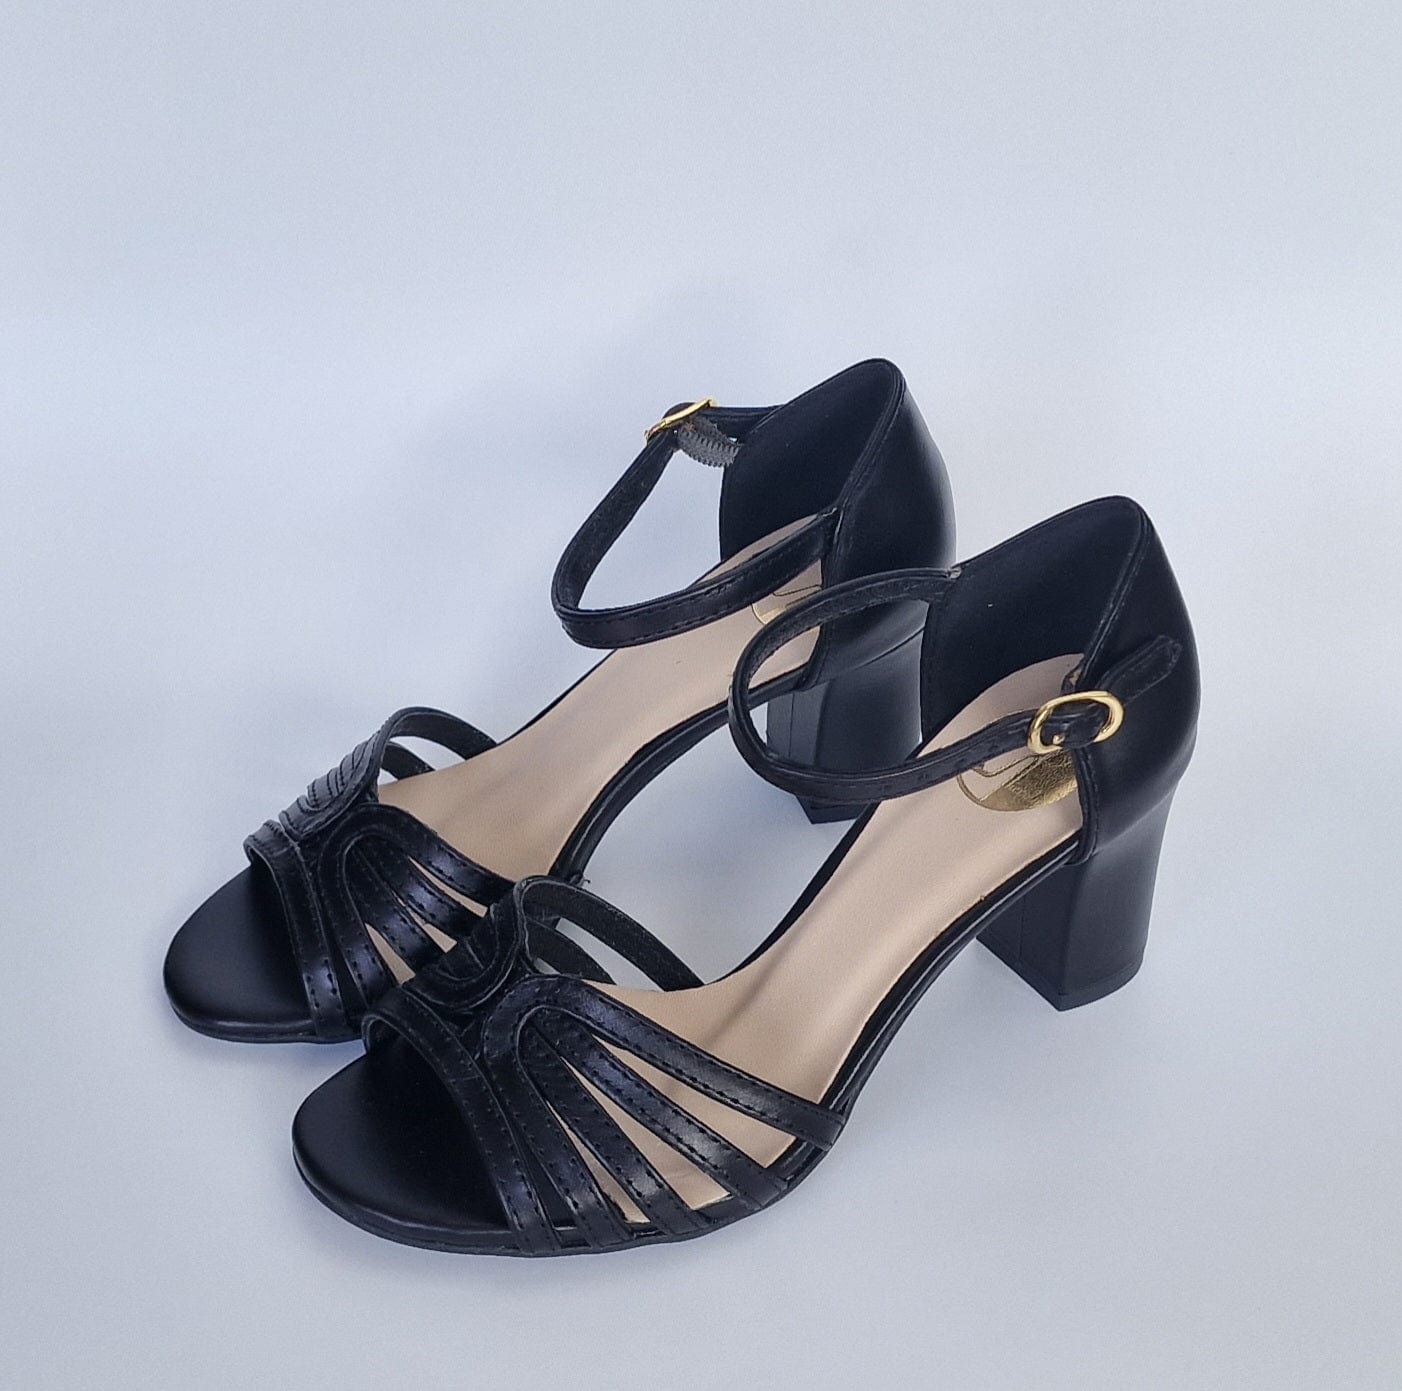 Black leather block heel small size ladies sandals